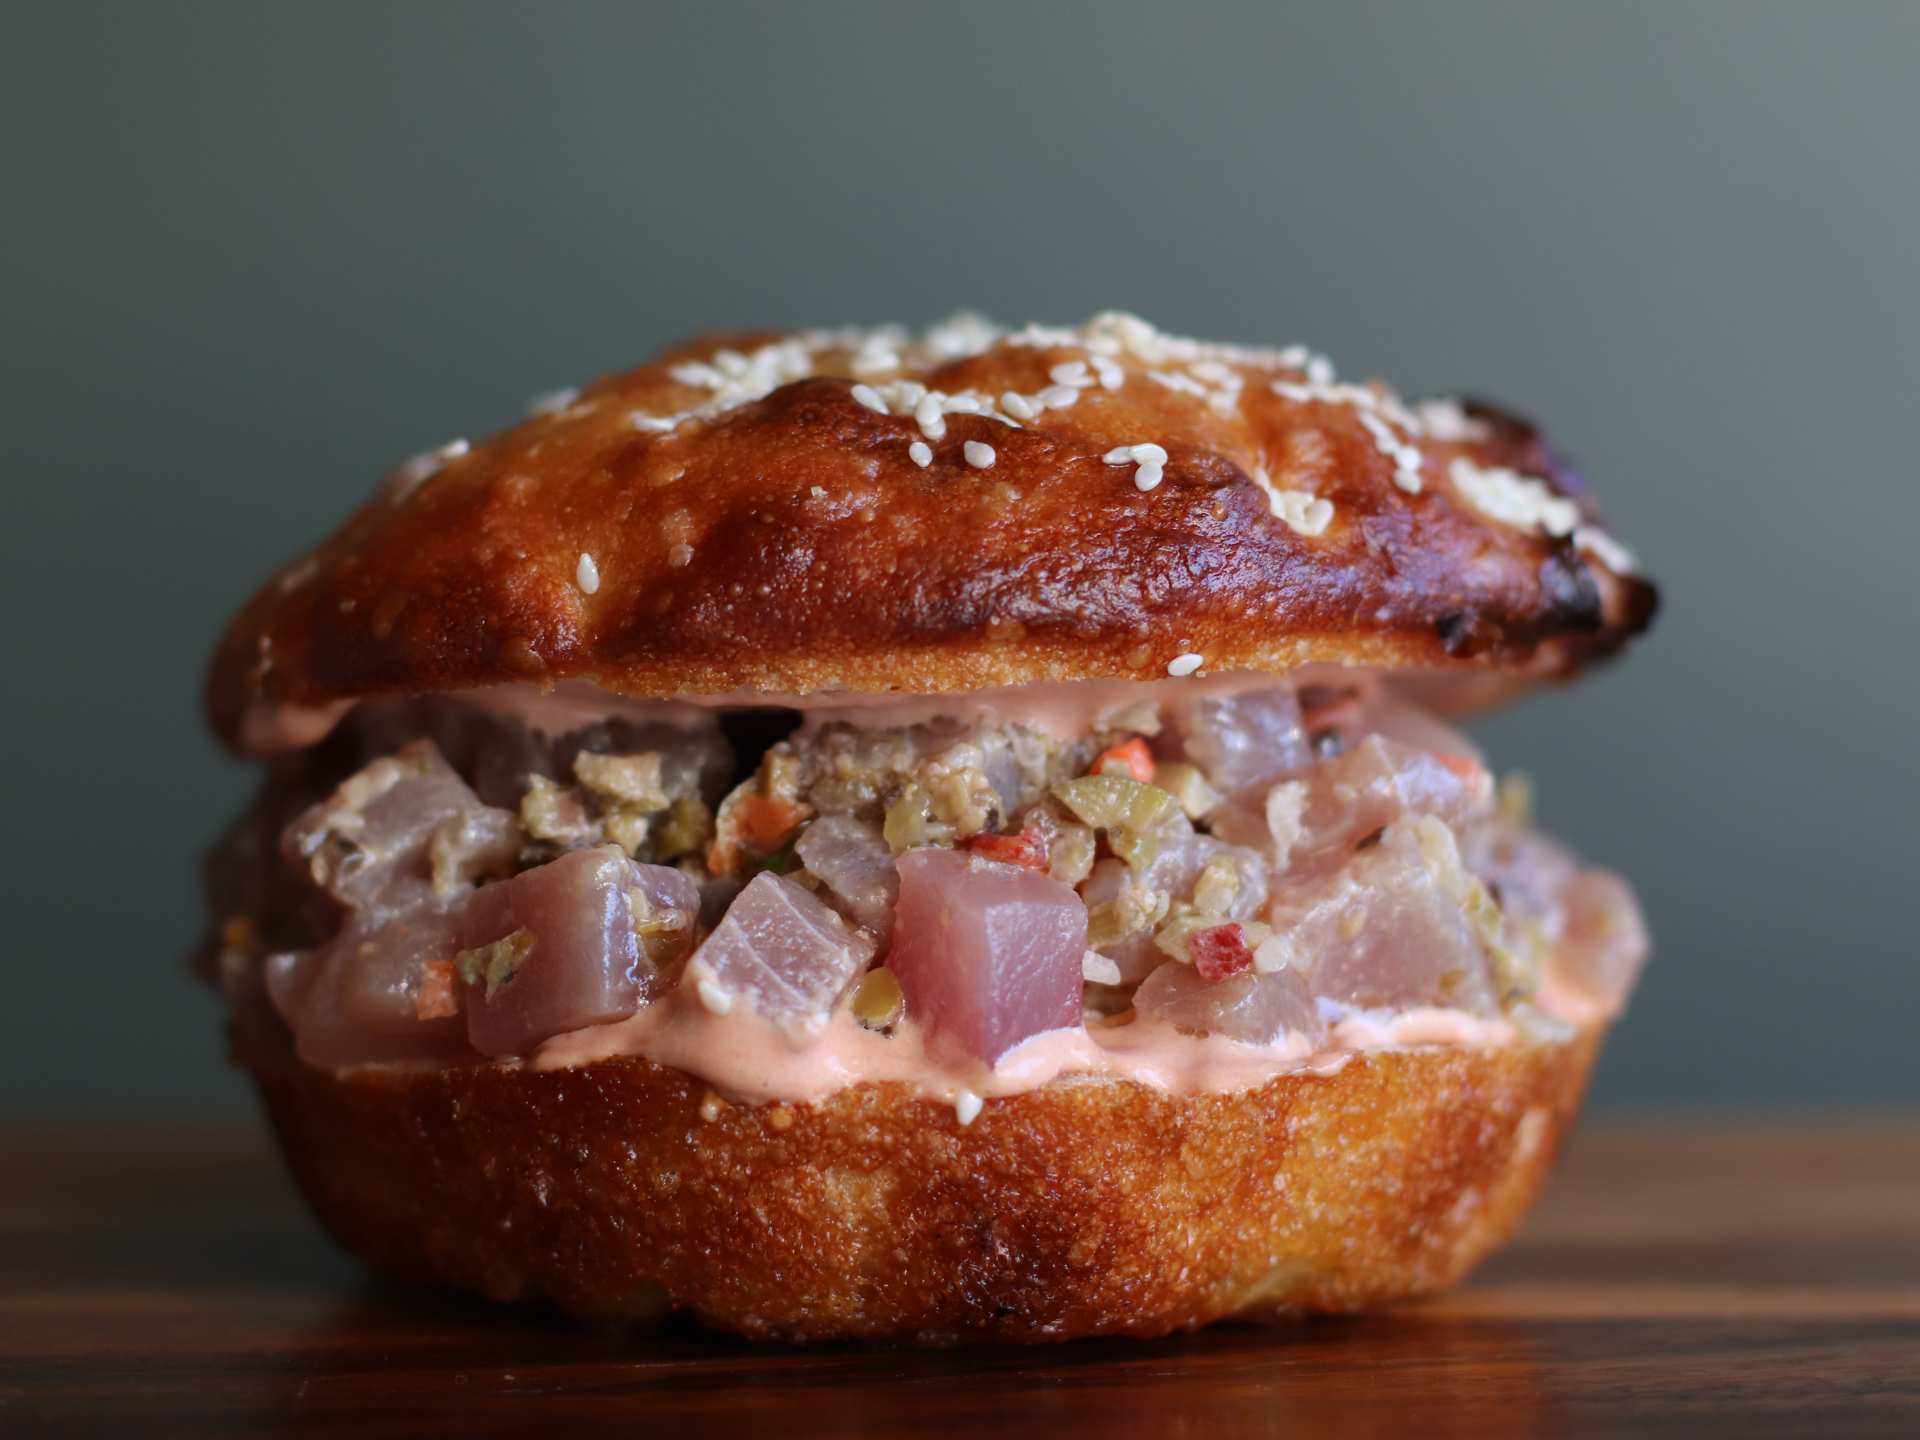 Best new restaurants Toronto | A meaty sandwich at Leslie's Sandwich Room